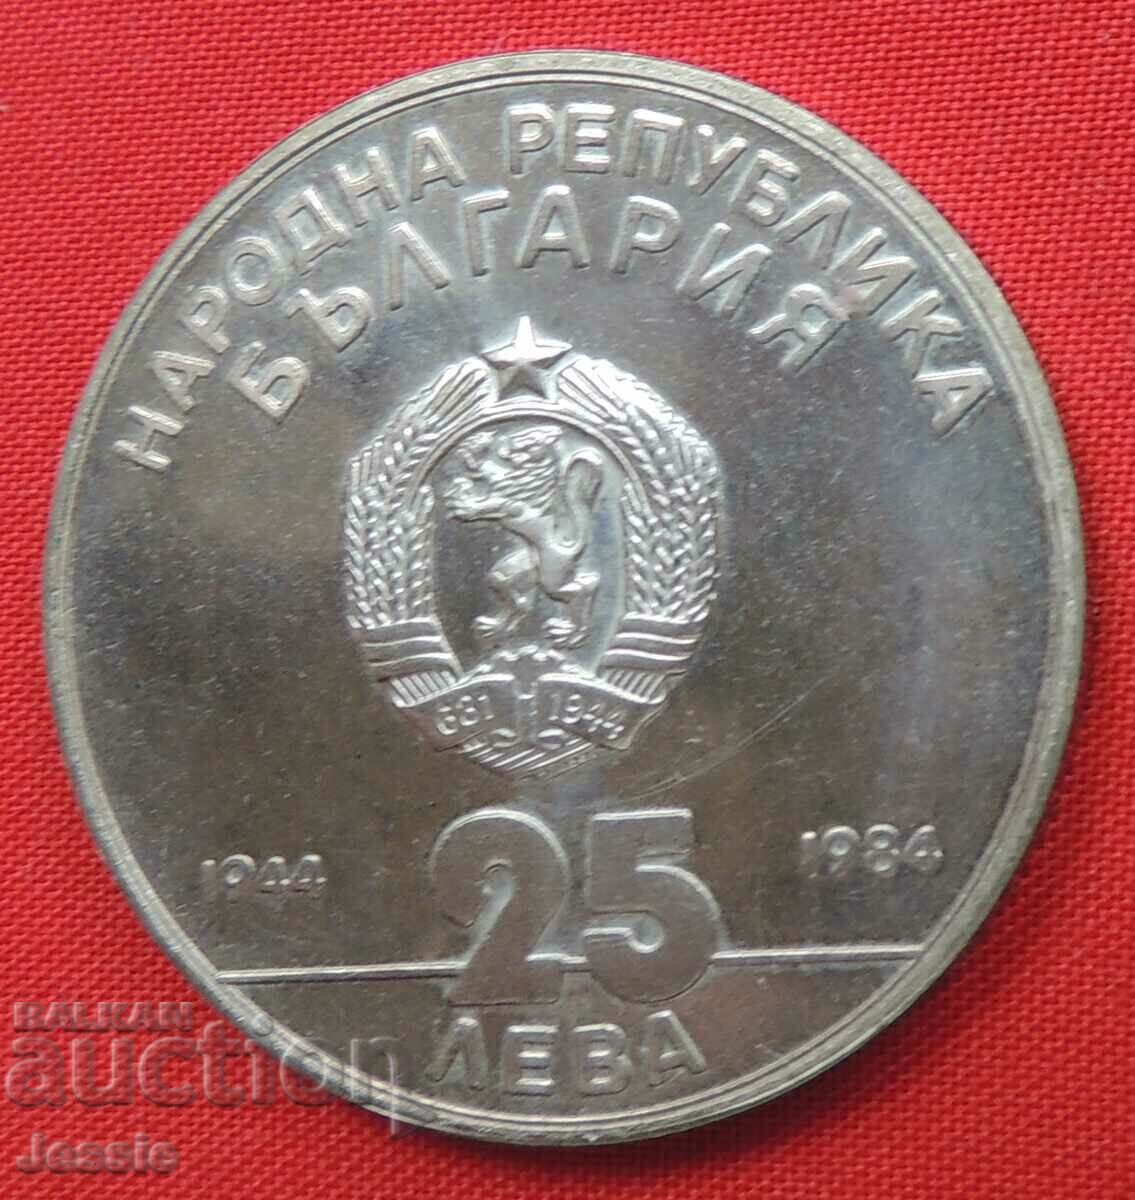 25 leva 40 years of social revolution 1984 silver MINT